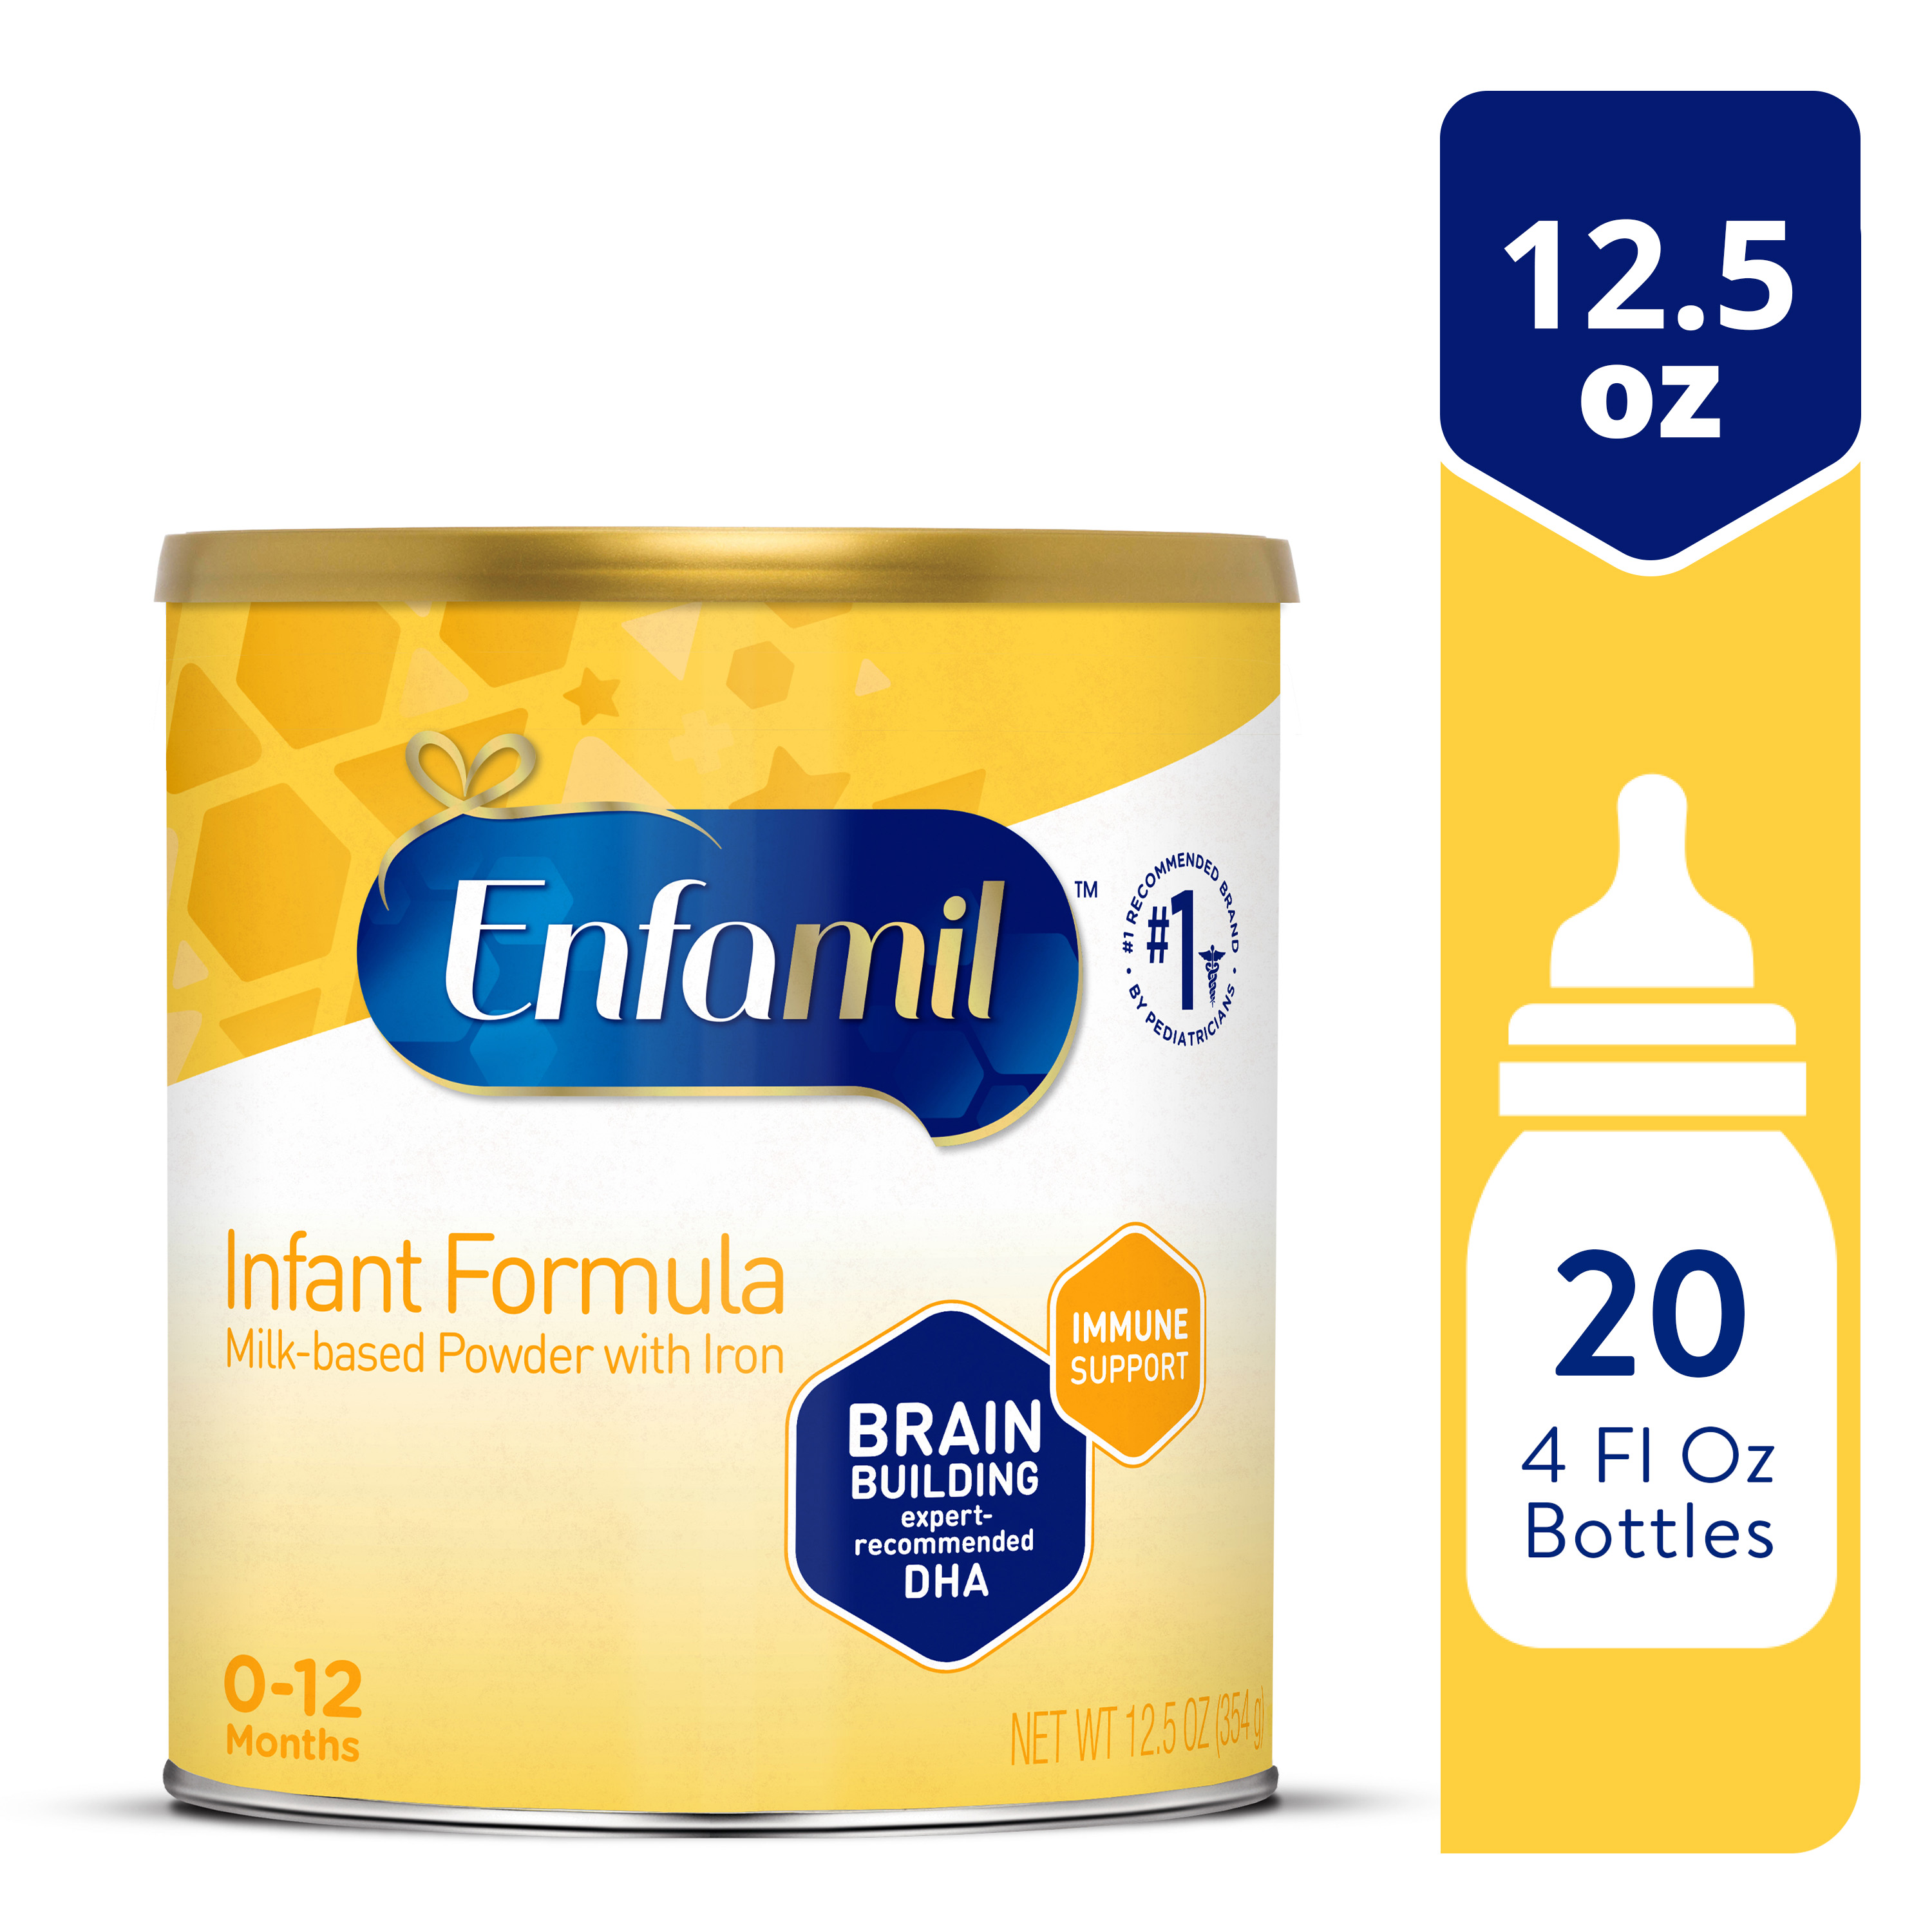 Enfamil Infant Formula, Milk-based Baby Formula with Iron, Brain-Building Omega-3 DHA & Choline, Dual Prebiotic Blend for Immune Support, Baby Milk, 12.5 Oz Powder Can​ - image 1 of 11